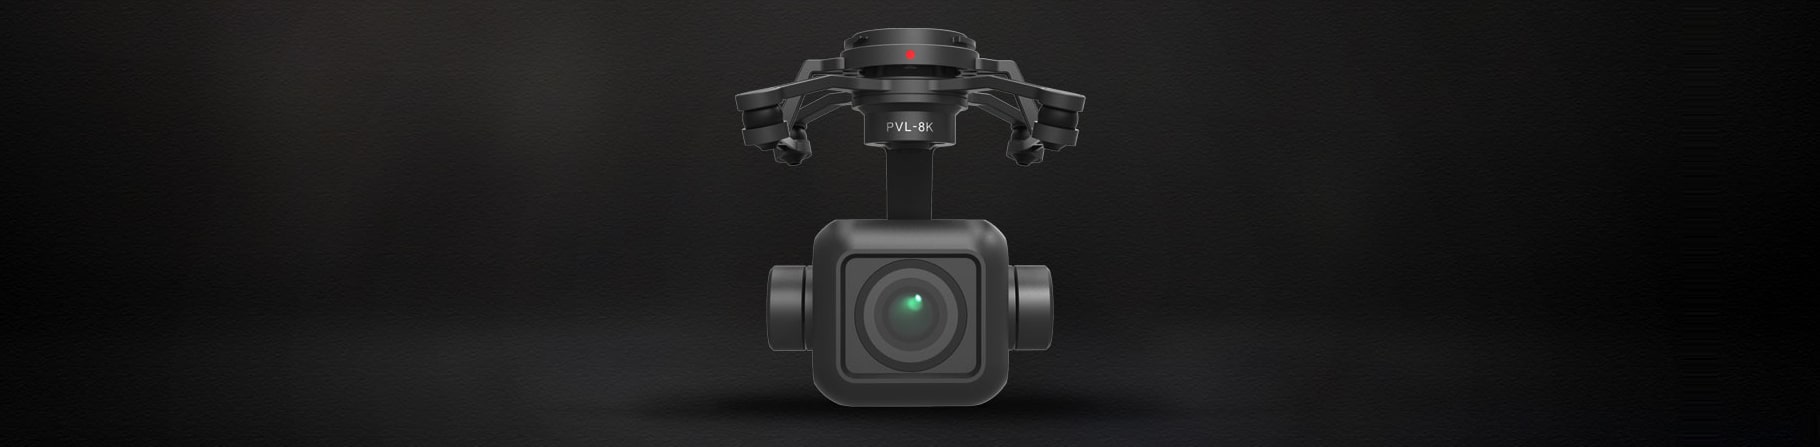 PVL-8K Camera